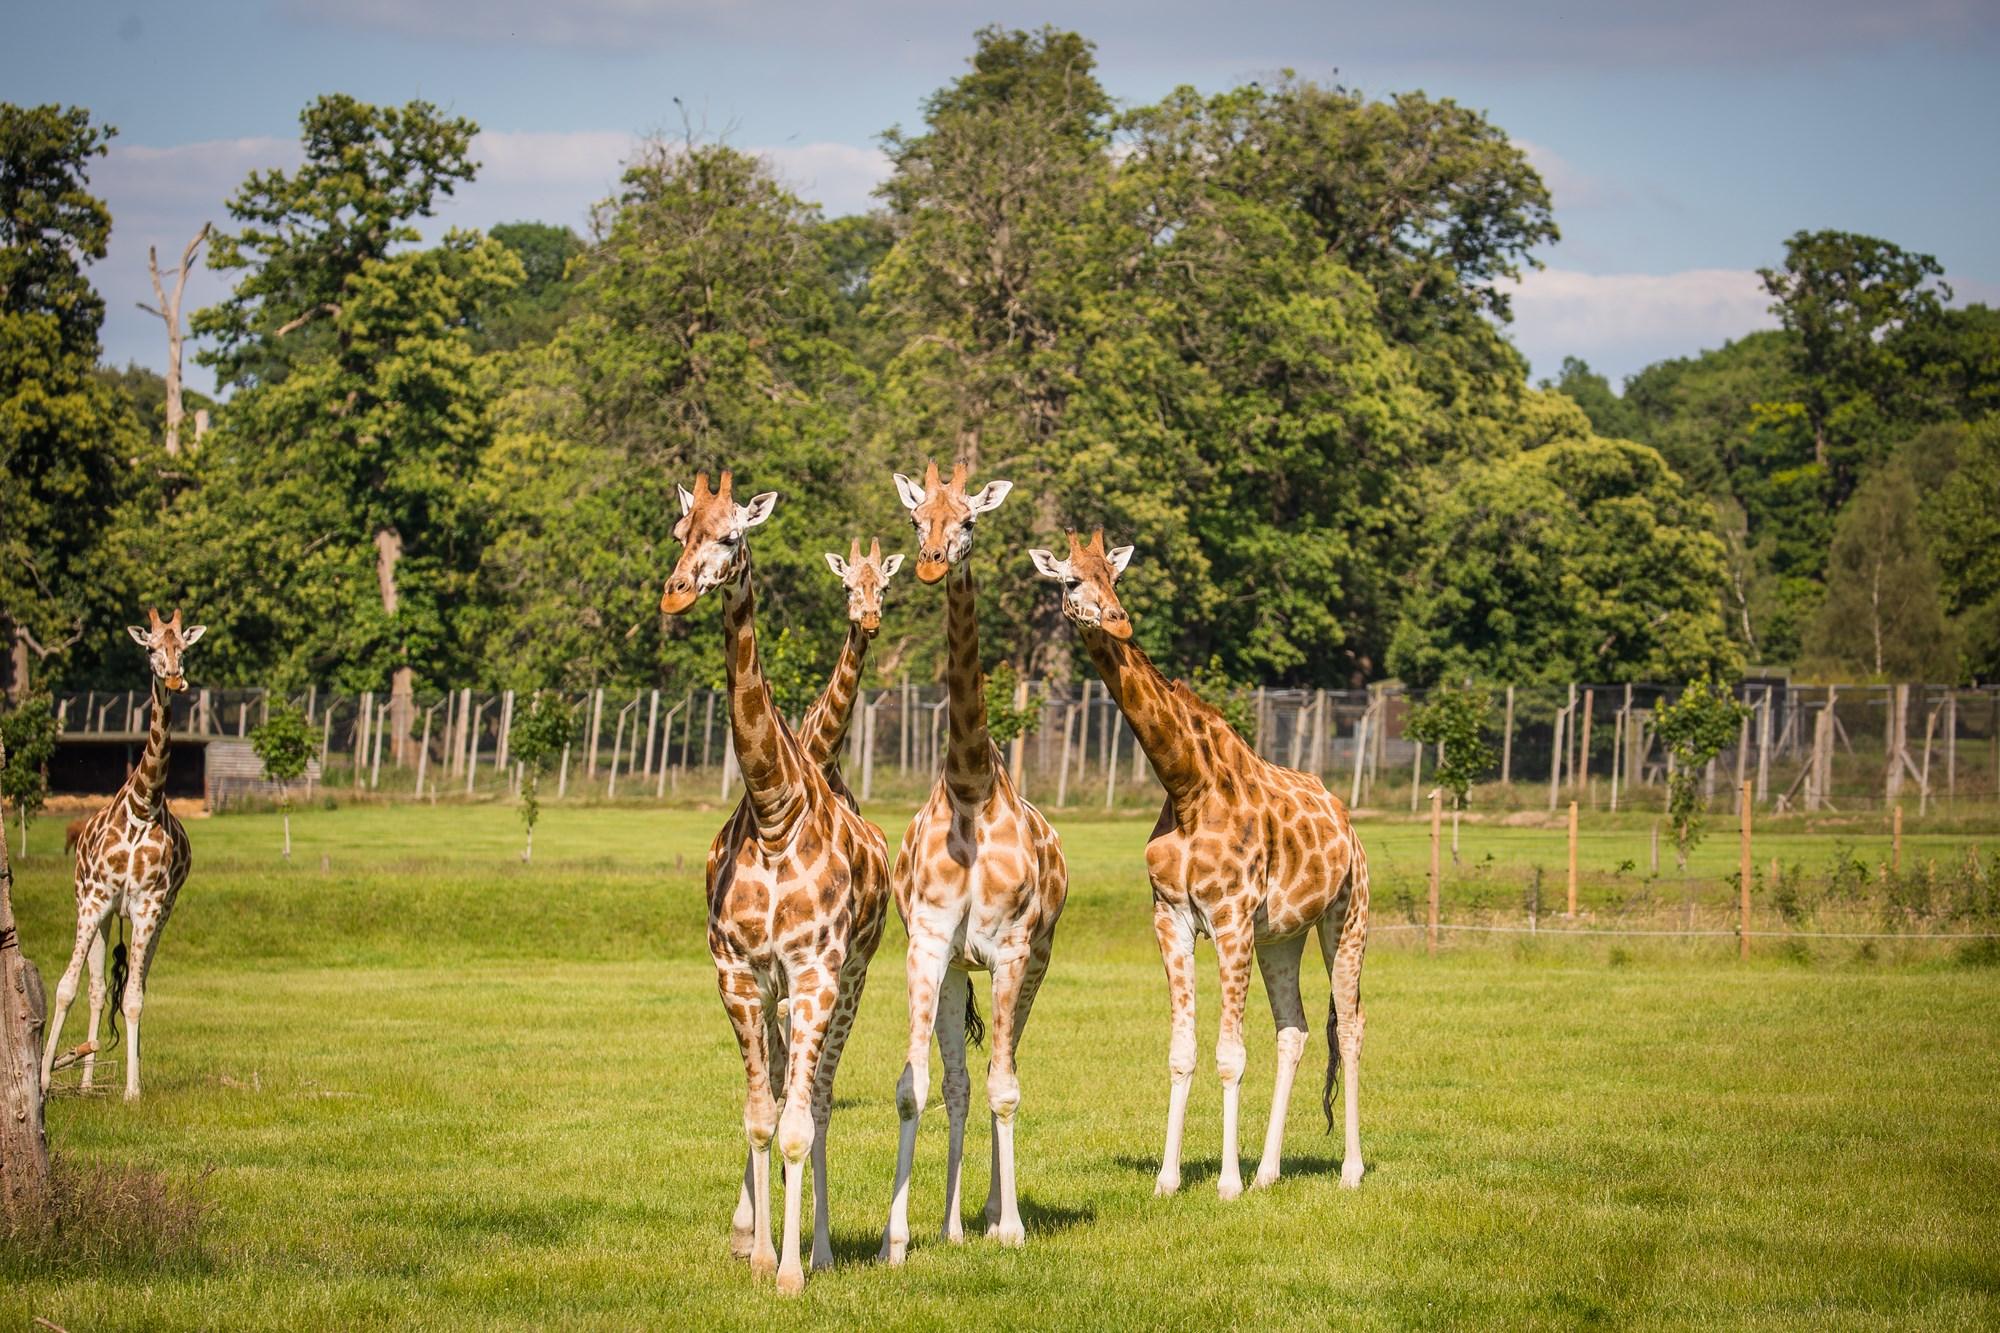 woburn safari park feed the giraffes